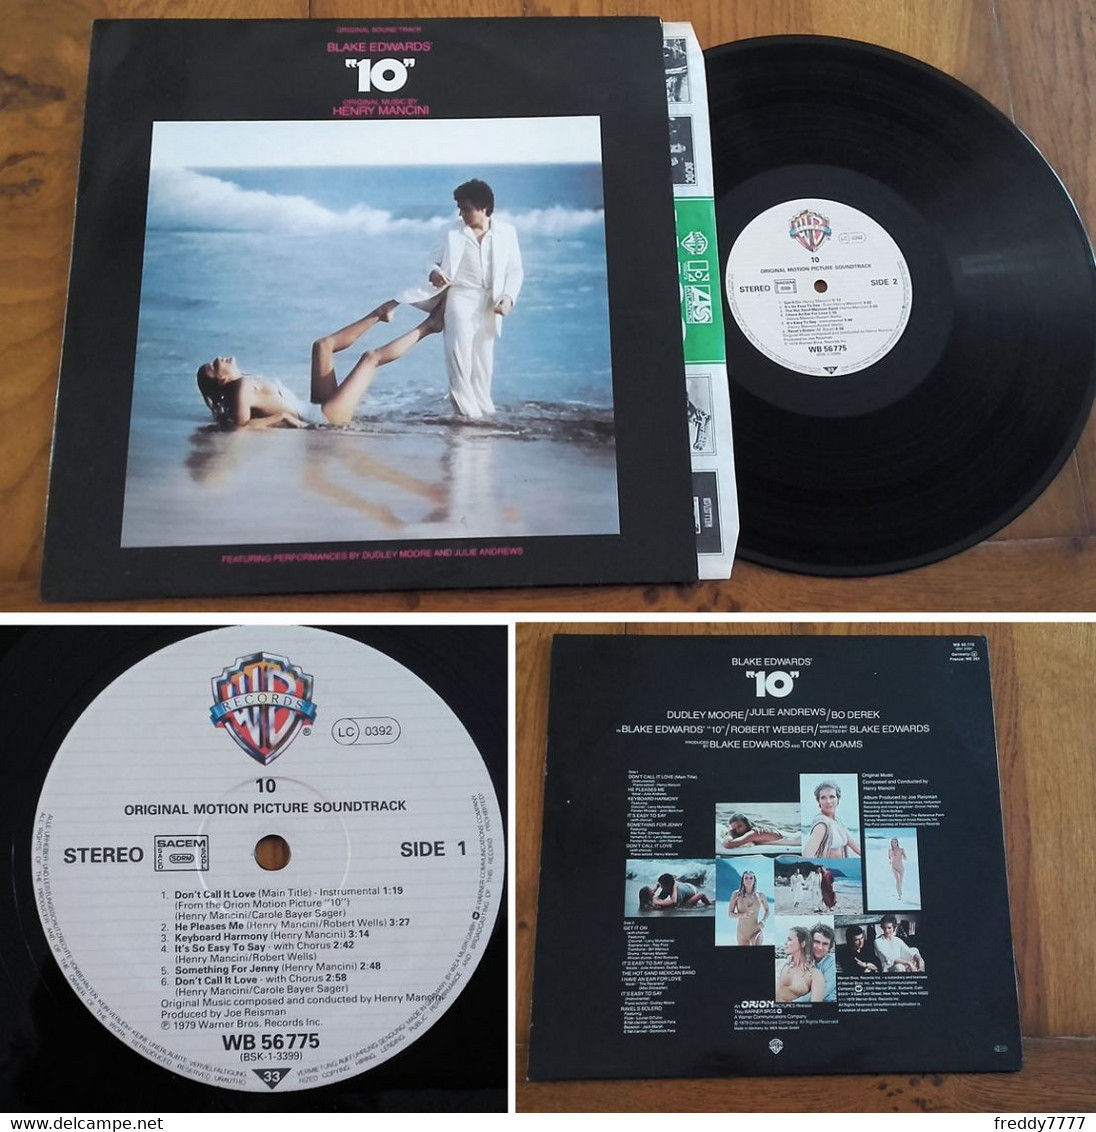 RARE Deutsch LP 33t RPM (12") BOF OST "10" ("ELLE") (Sexy Bo Derek P/s, 1979) - Soundtracks, Film Music